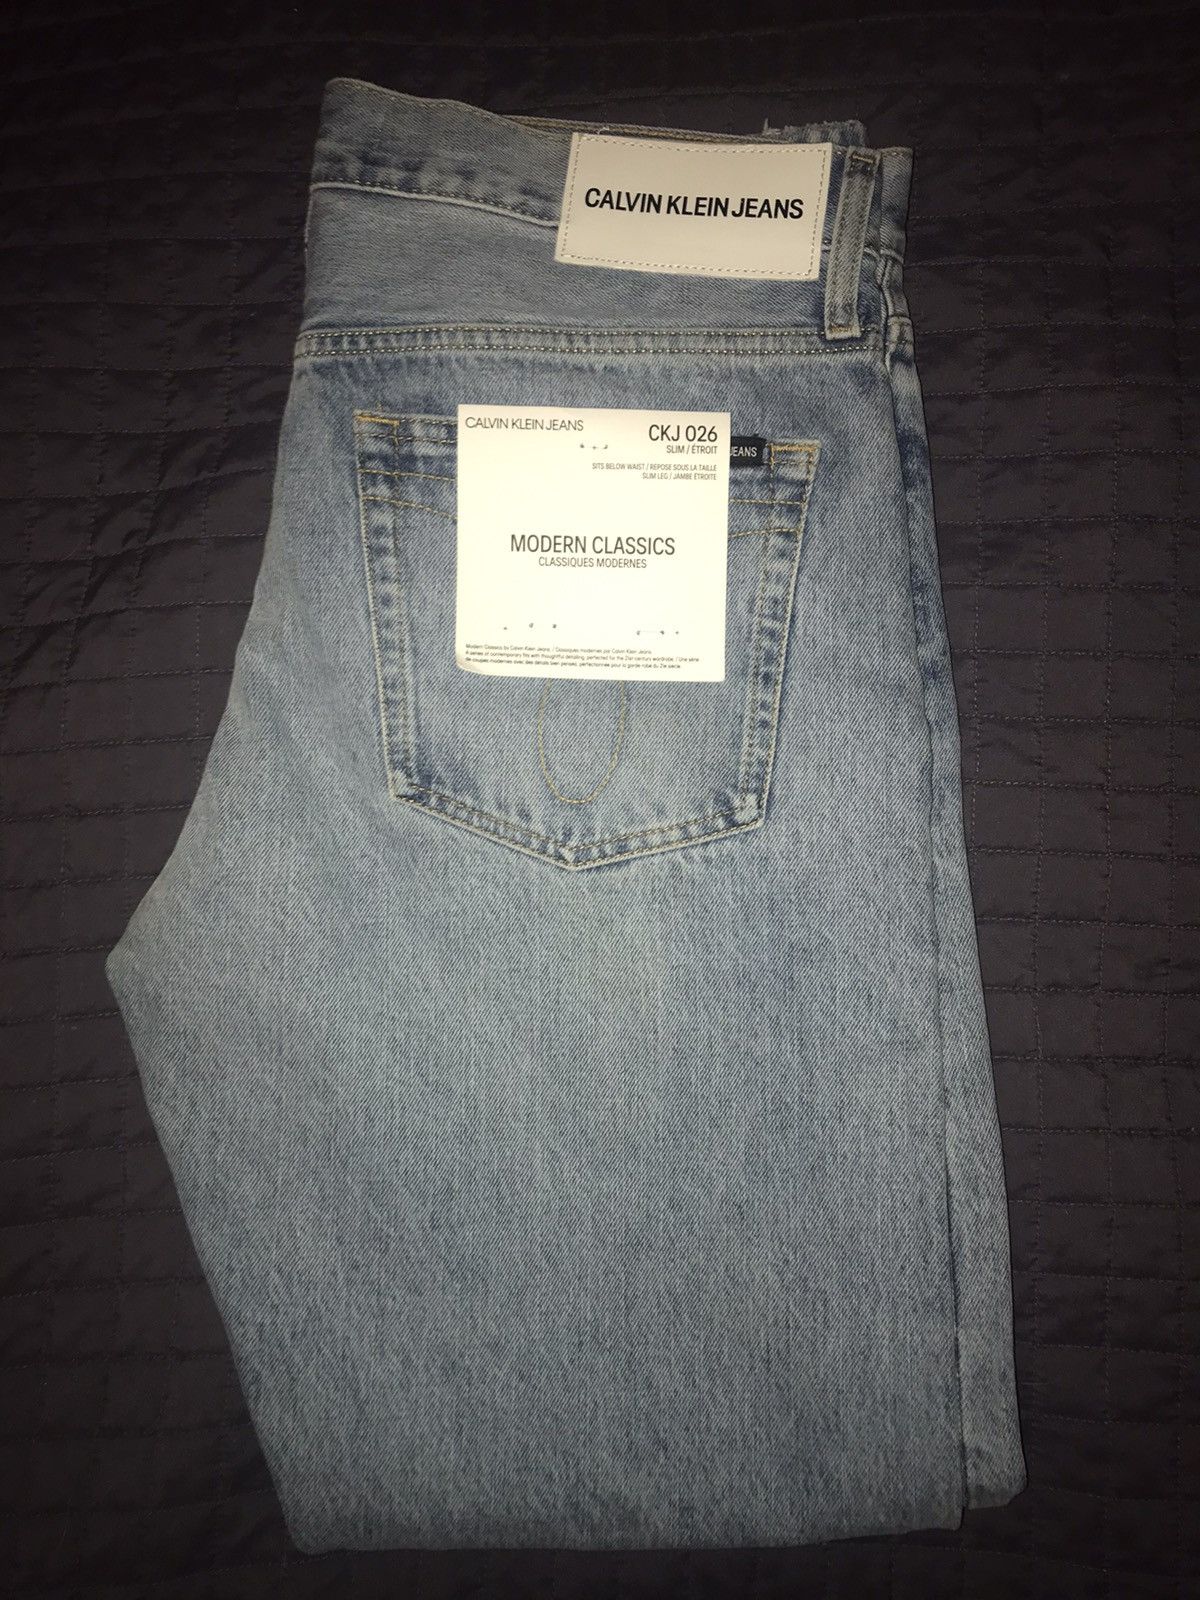 Klein Modern classics jeans Calvin ckj 026 | Grailed